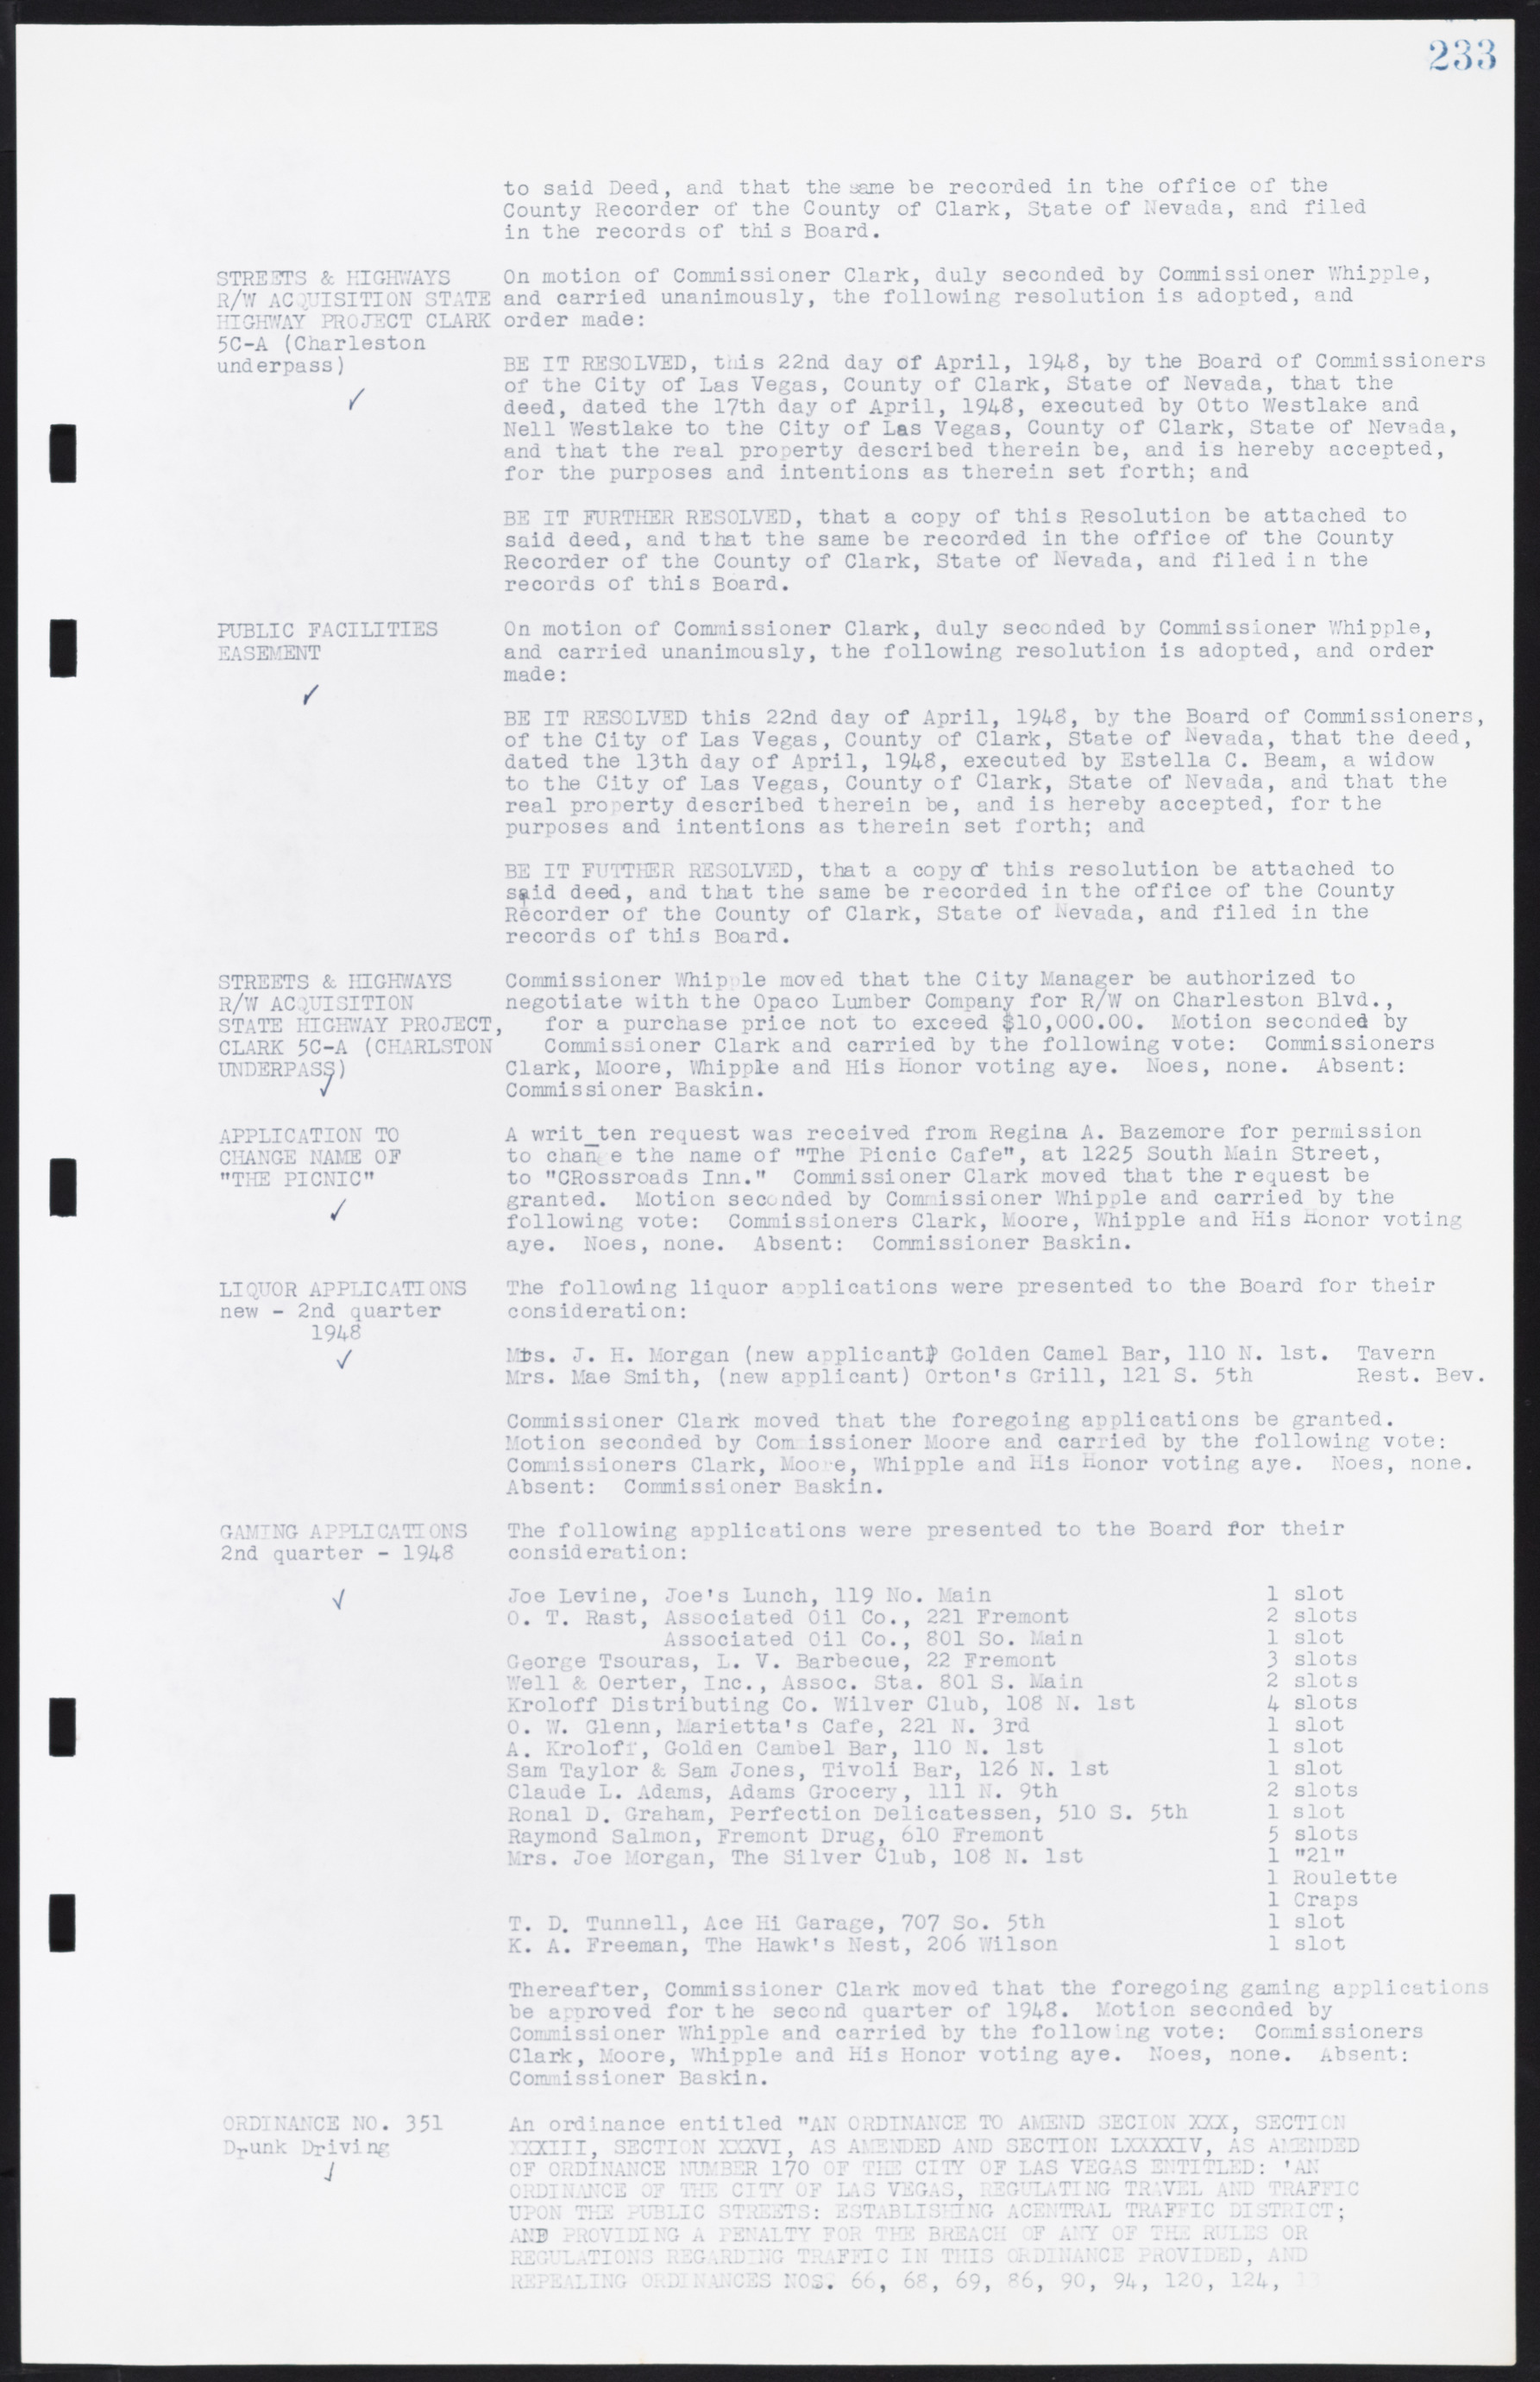 Las Vegas City Commission Minutes, January 7, 1947 to October 26, 1949, lvc000006-255